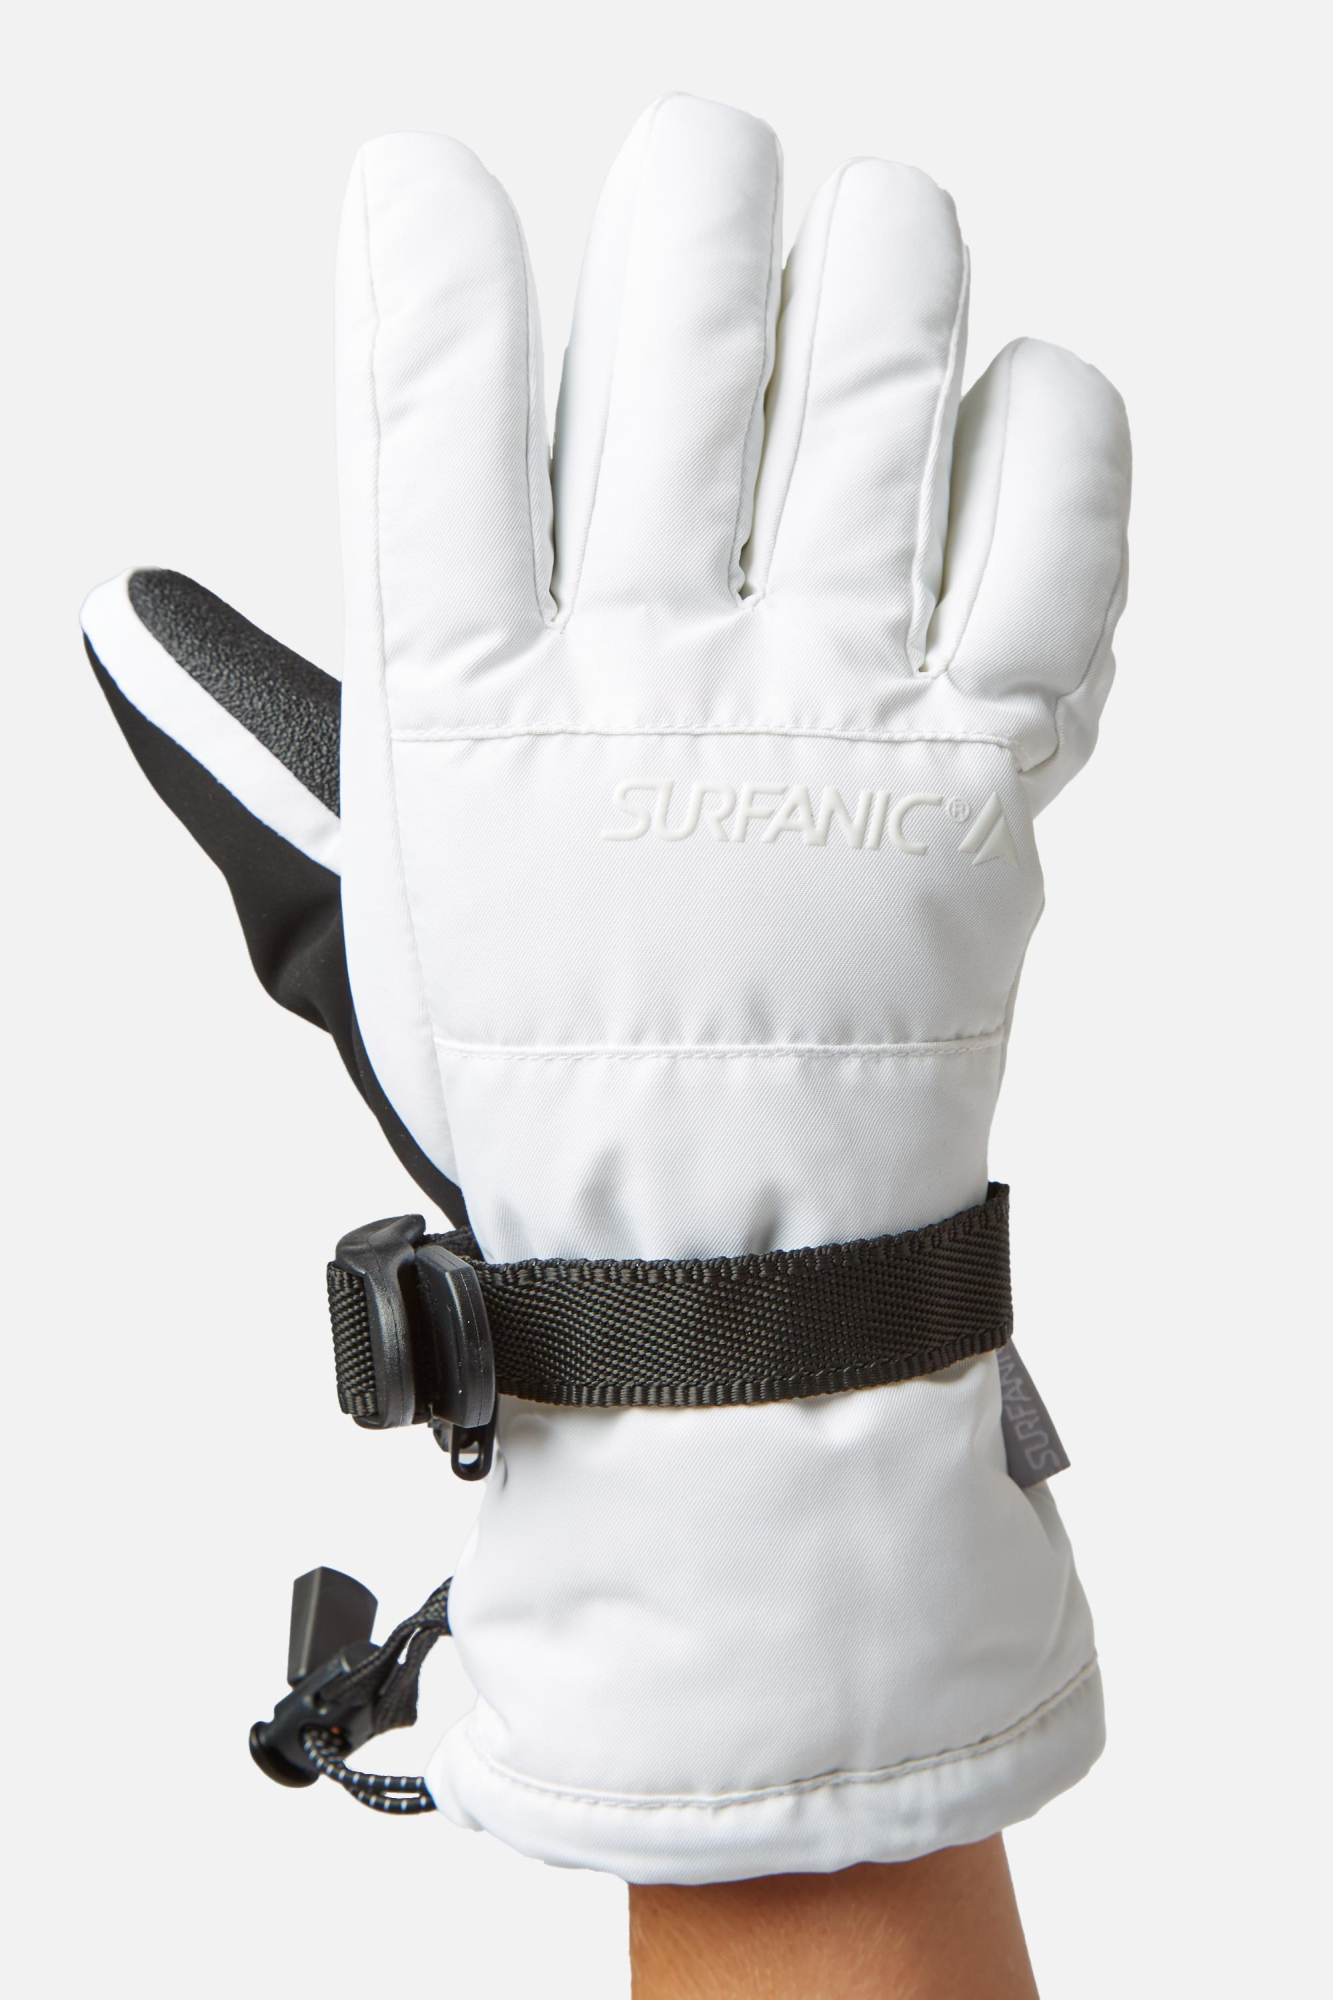 Surfanic Womens Alaska Glove White - Size: XS